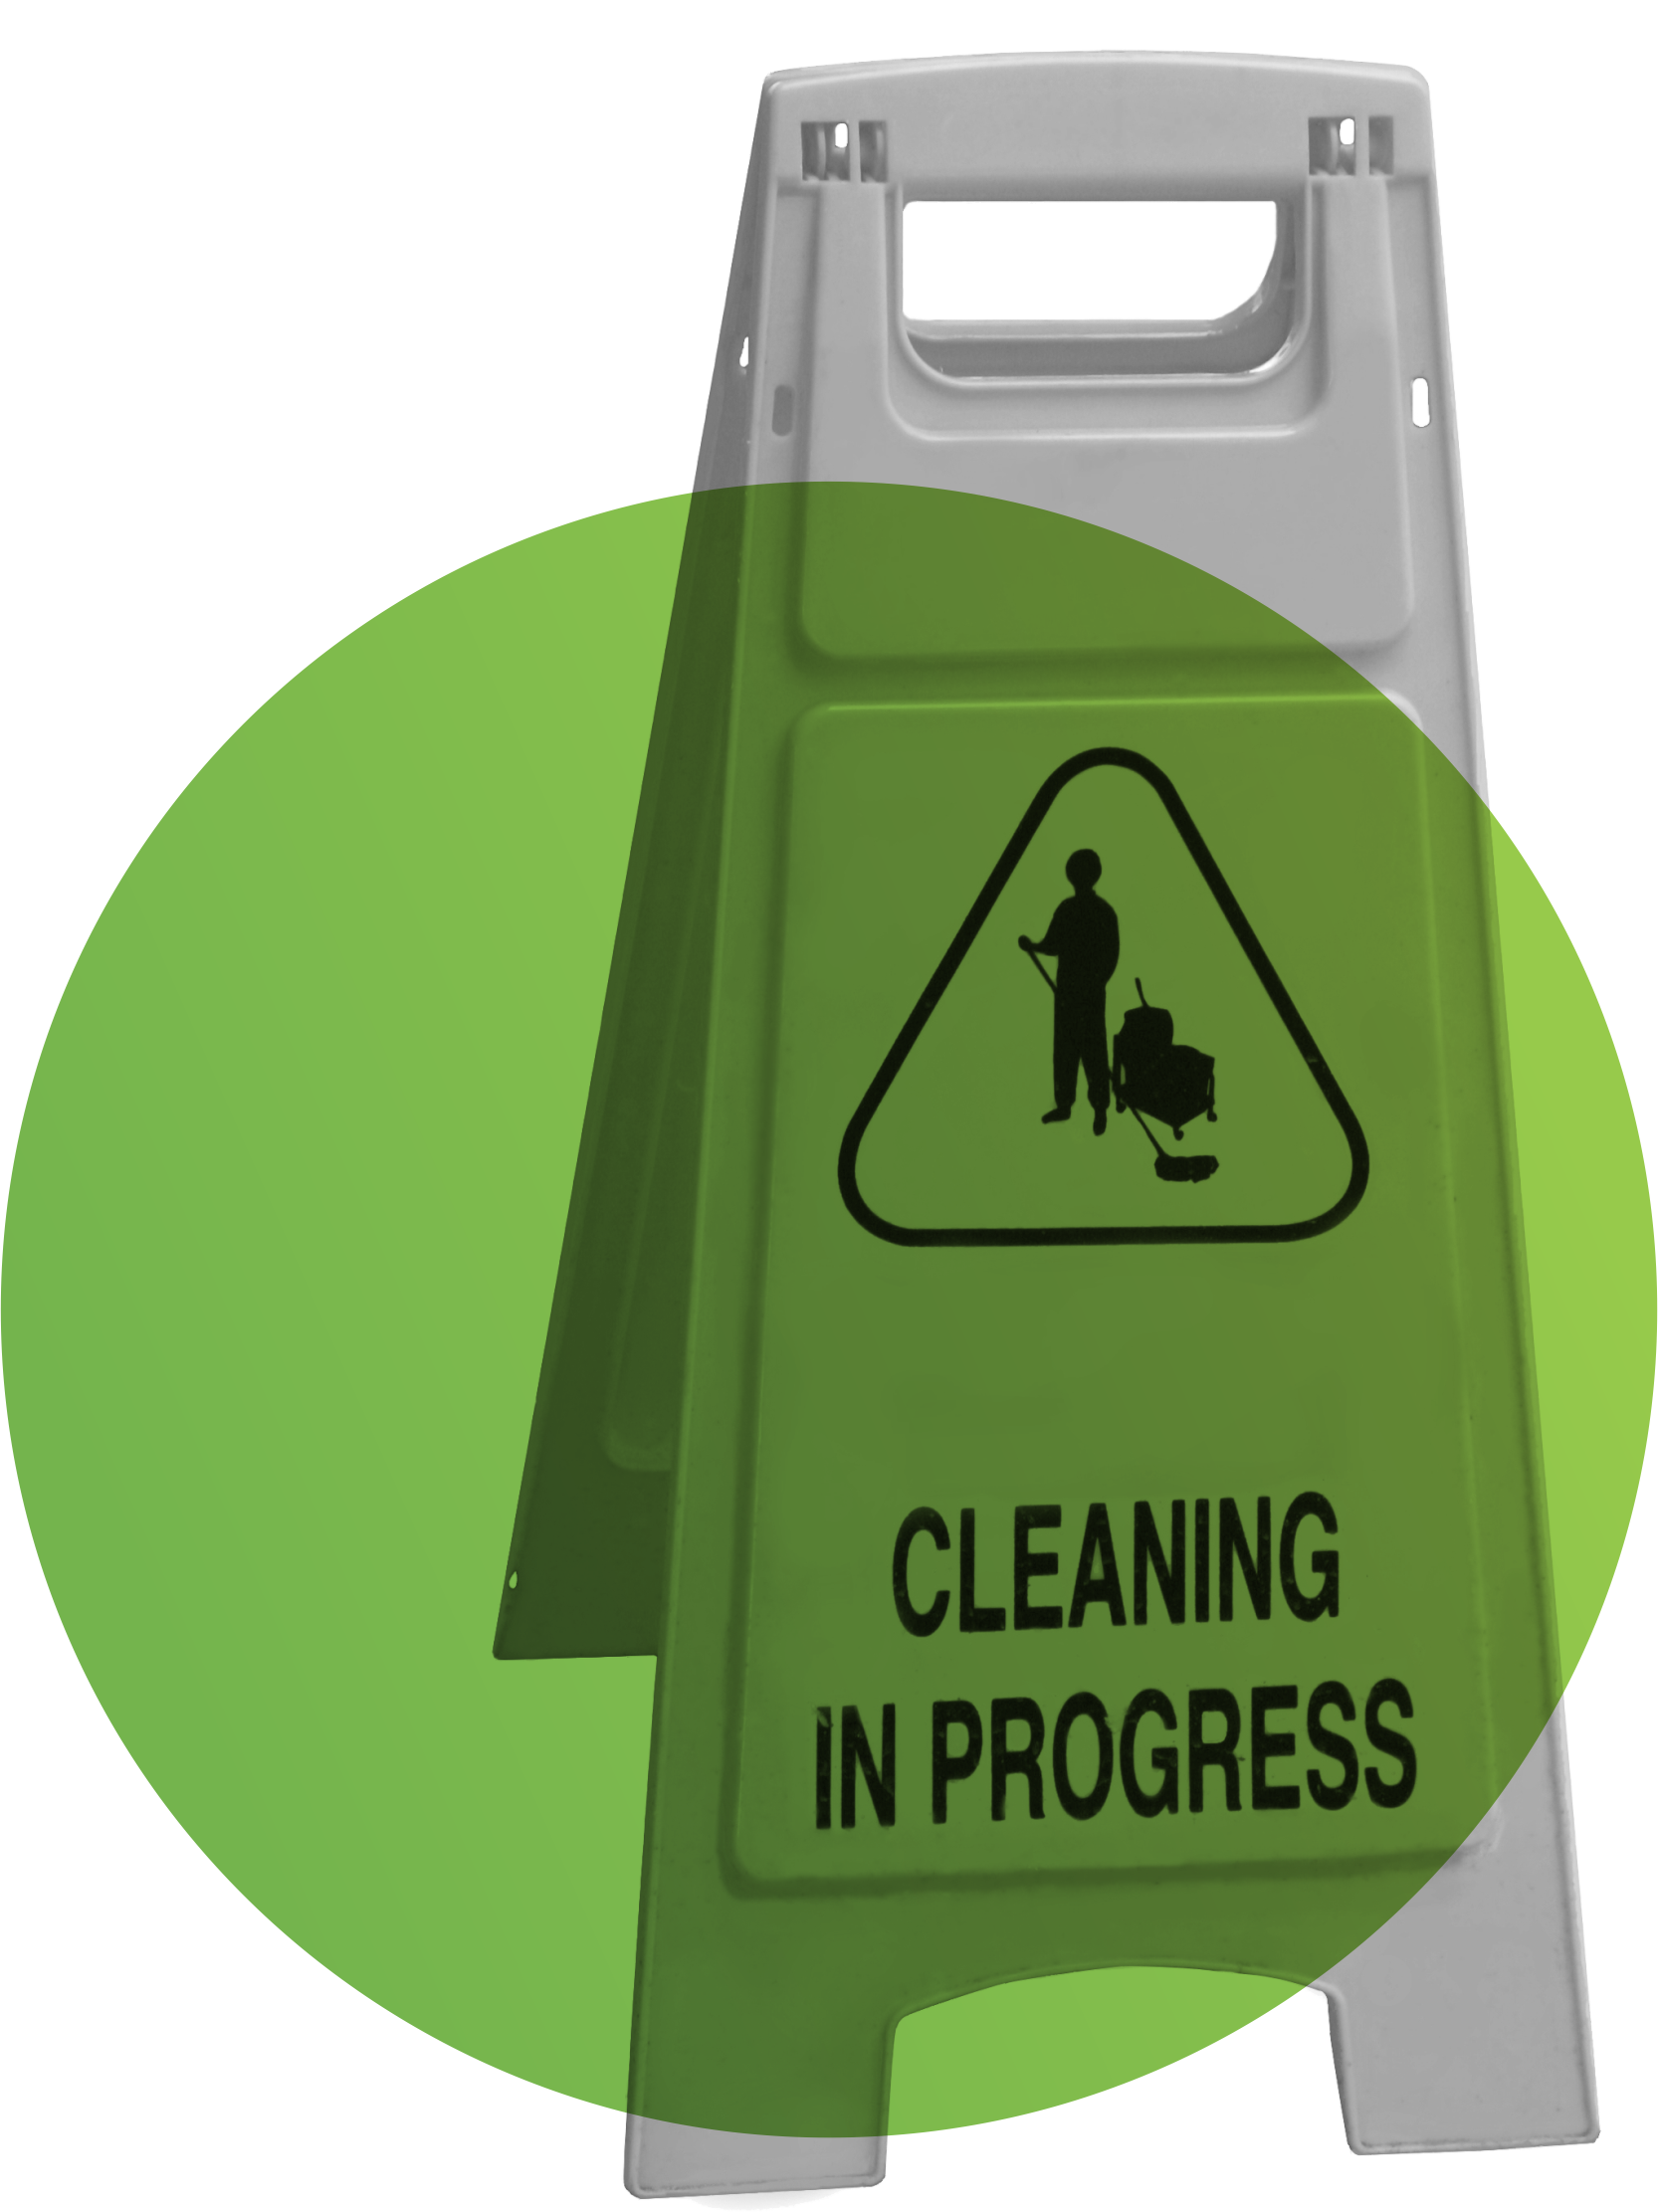 Image of Cleaning in Progress floor sign